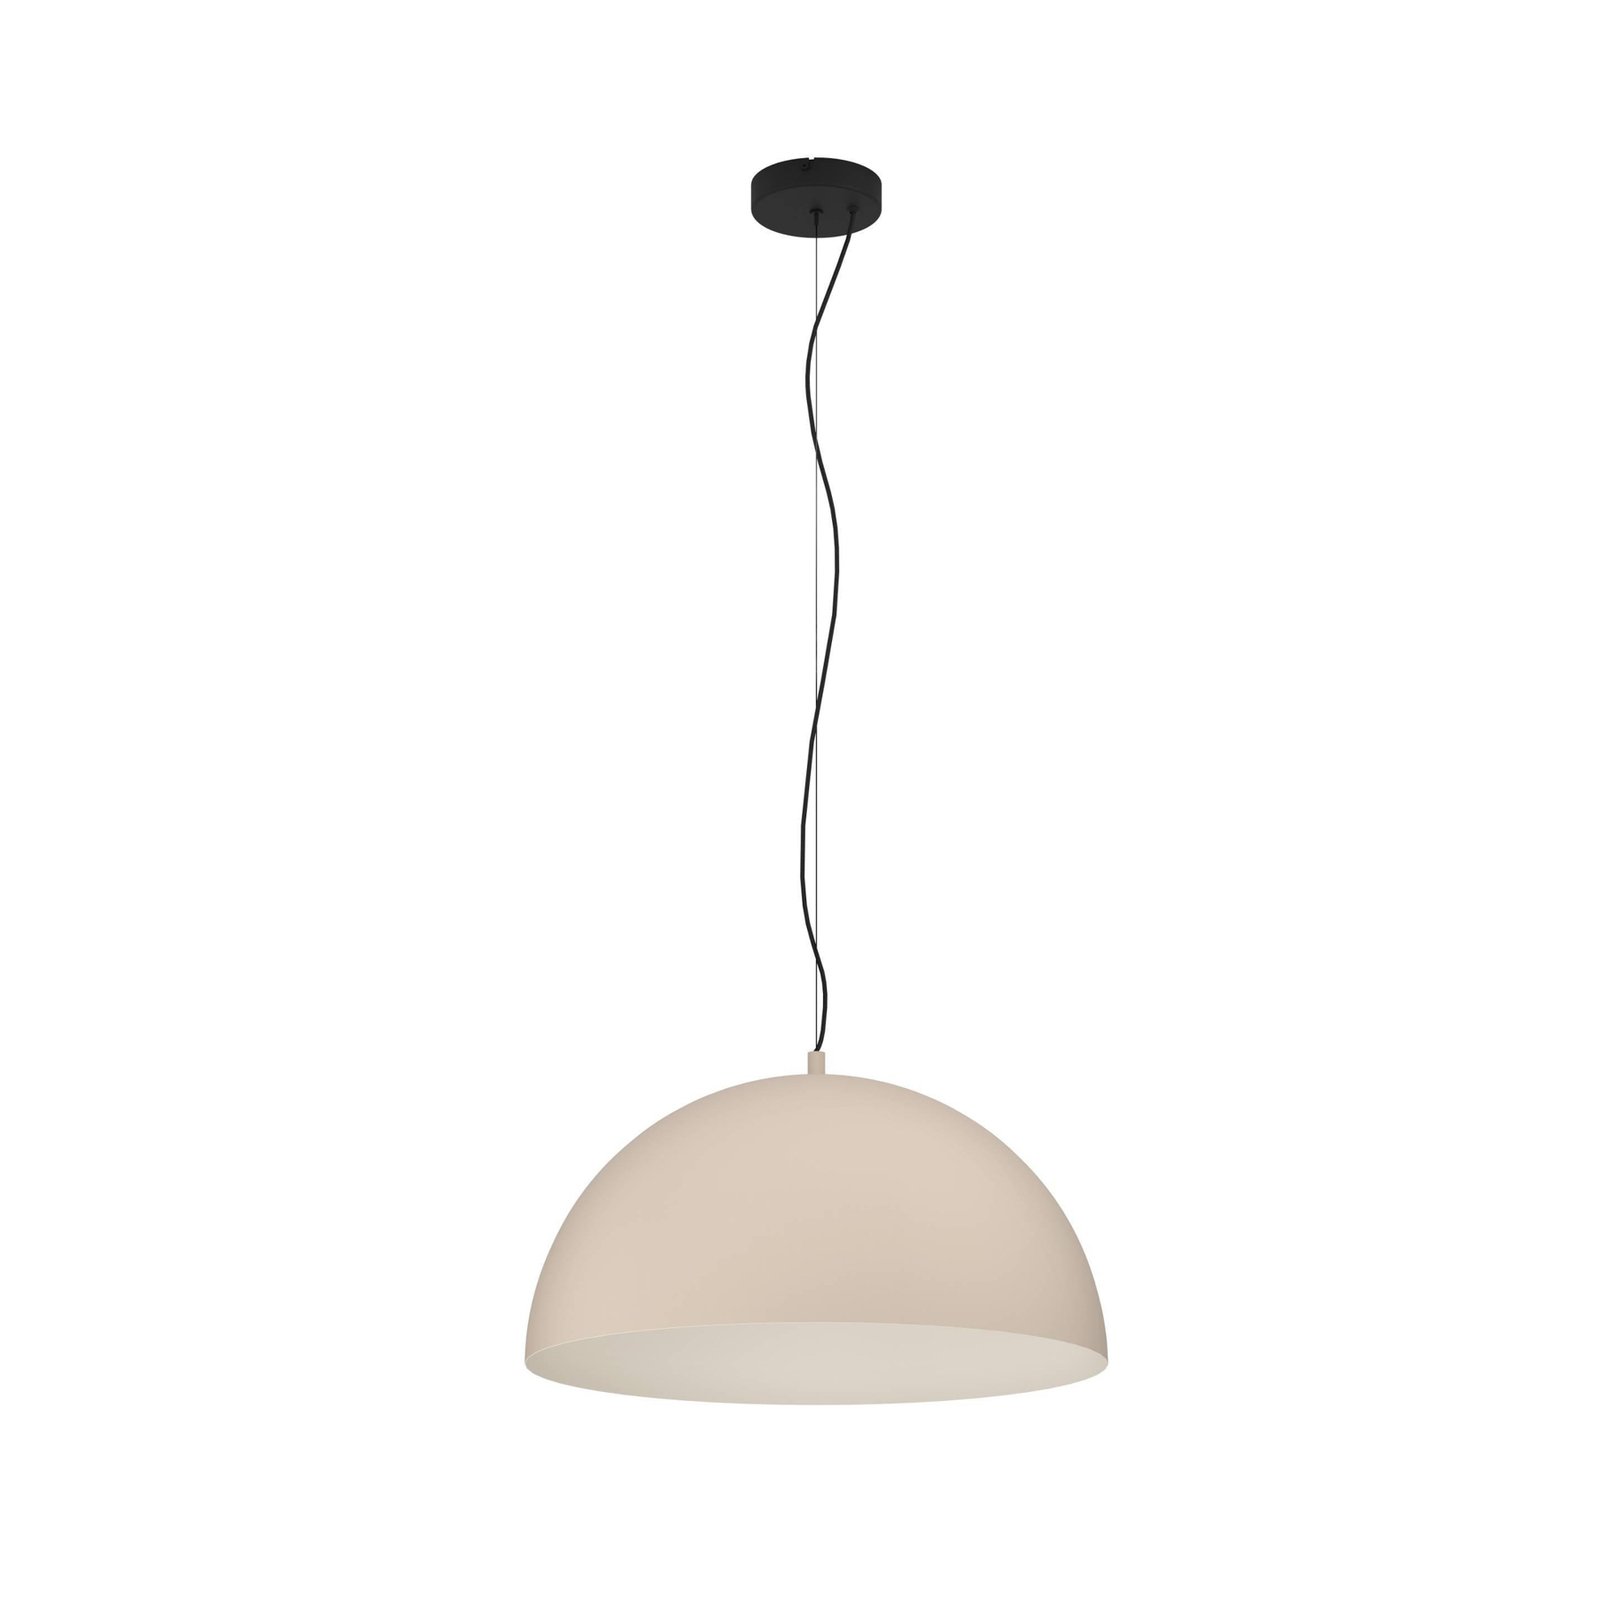 Gaetano 1 hanglamp, Ø 53 cm, zand/crème, staal